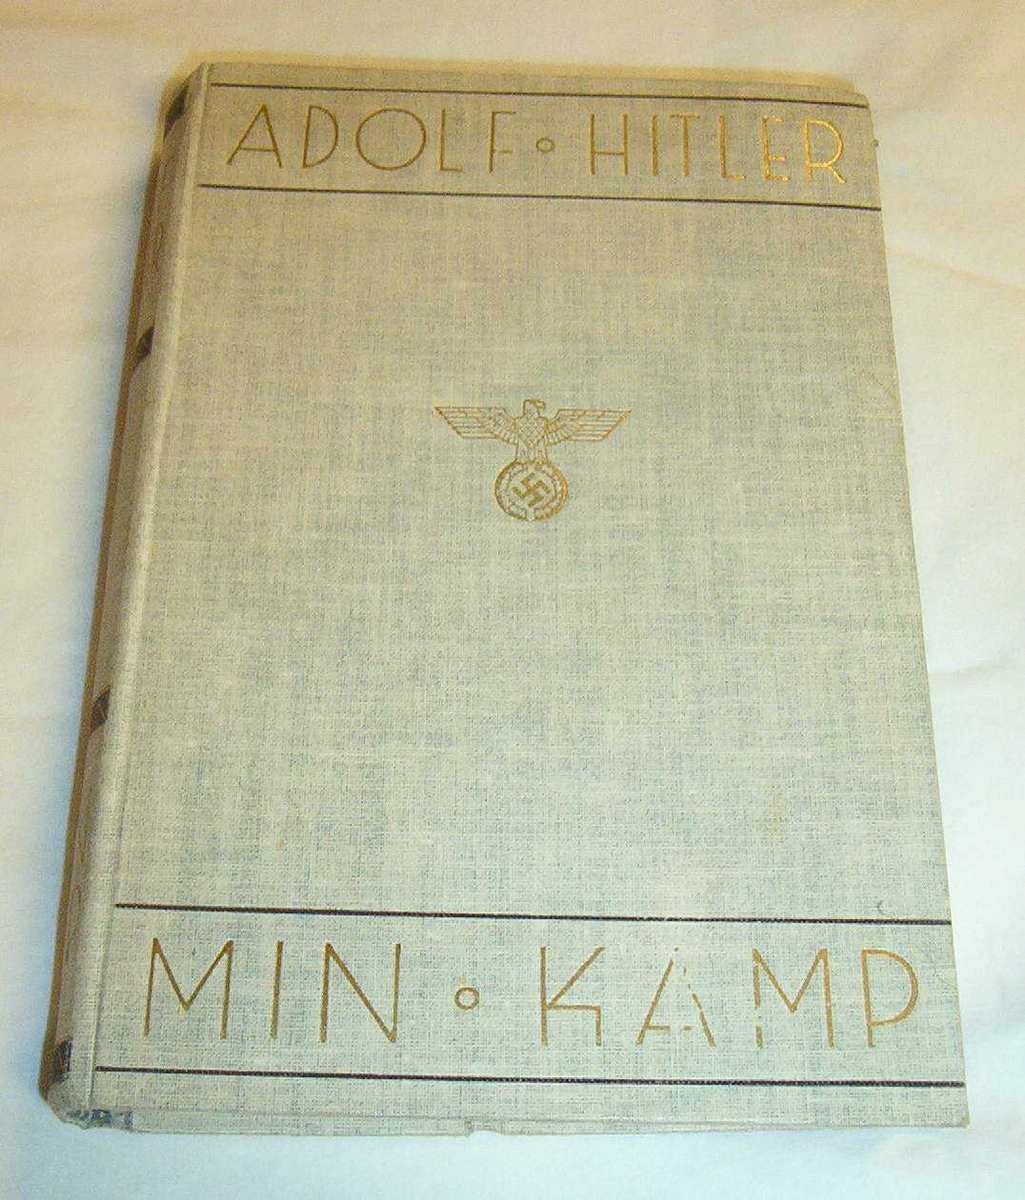 Adolf Hitlers Min kamp. 
J.M. stenersens forlag. Oslo 1941
Bind II